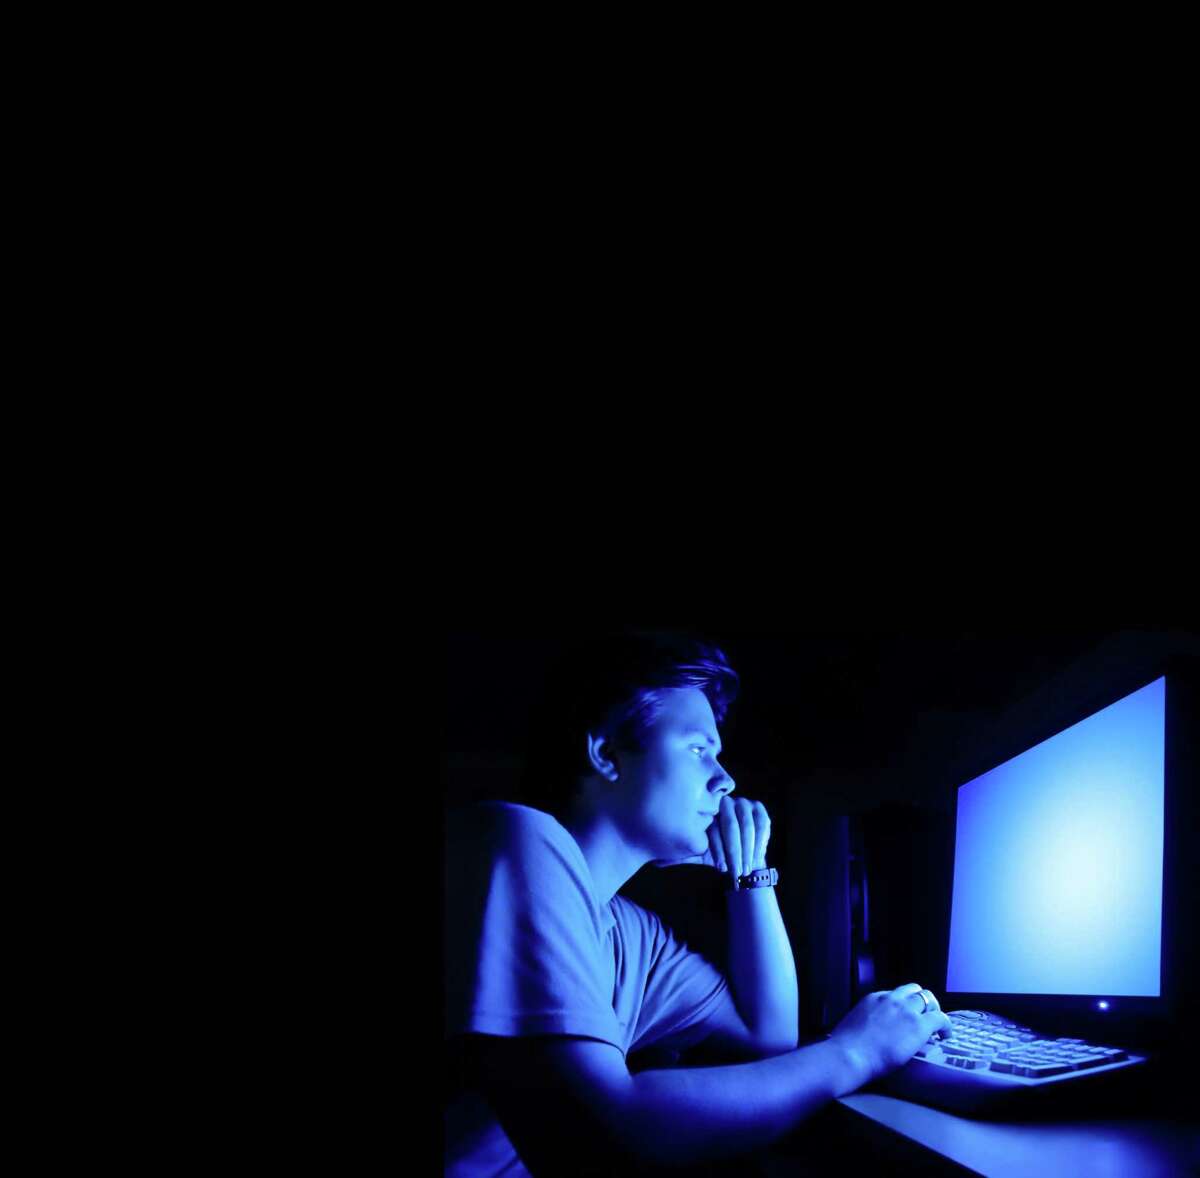 Guy looking at computer screen(Dreamstime/TNS)